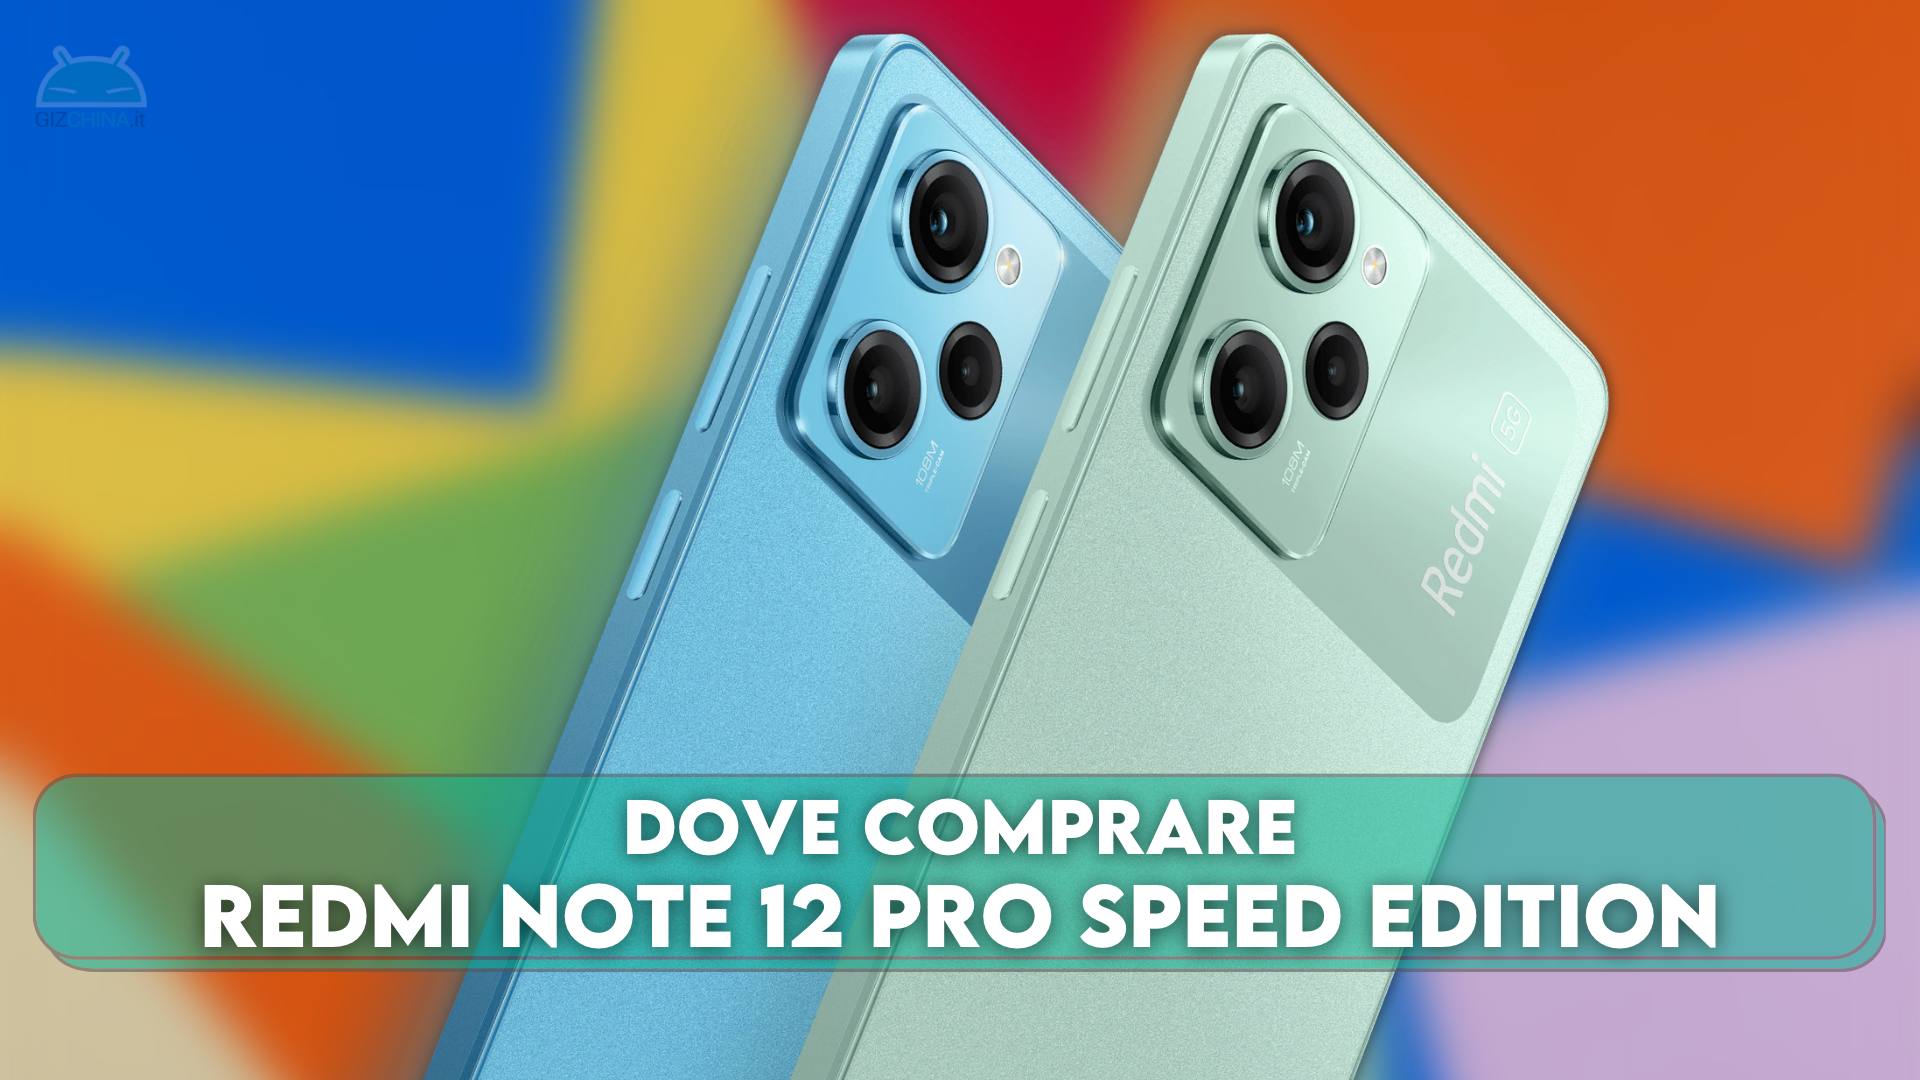 Redmi Note 12 Pro Speed Edition. Redmi Note 12 Pro Speed Edition (Redwood);.